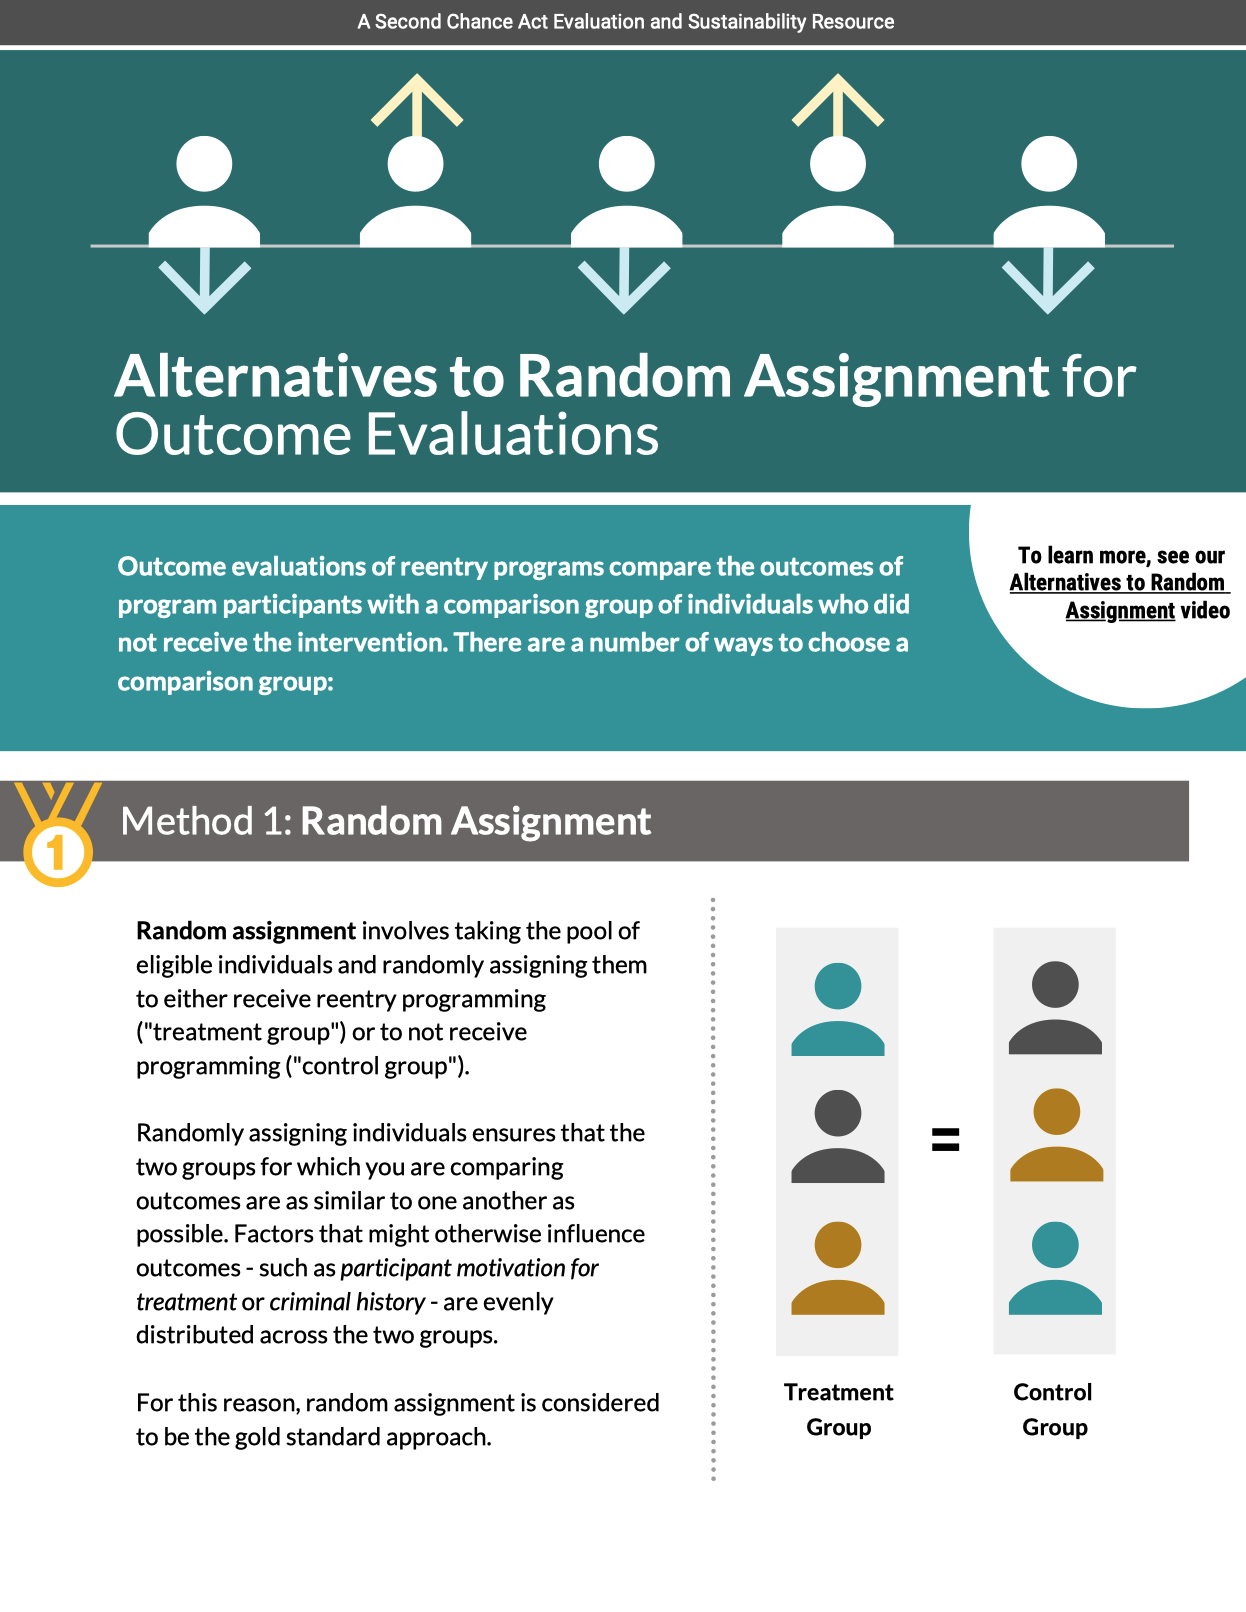 Alternatives to Random Assignment for Outcome Evaluations infographic